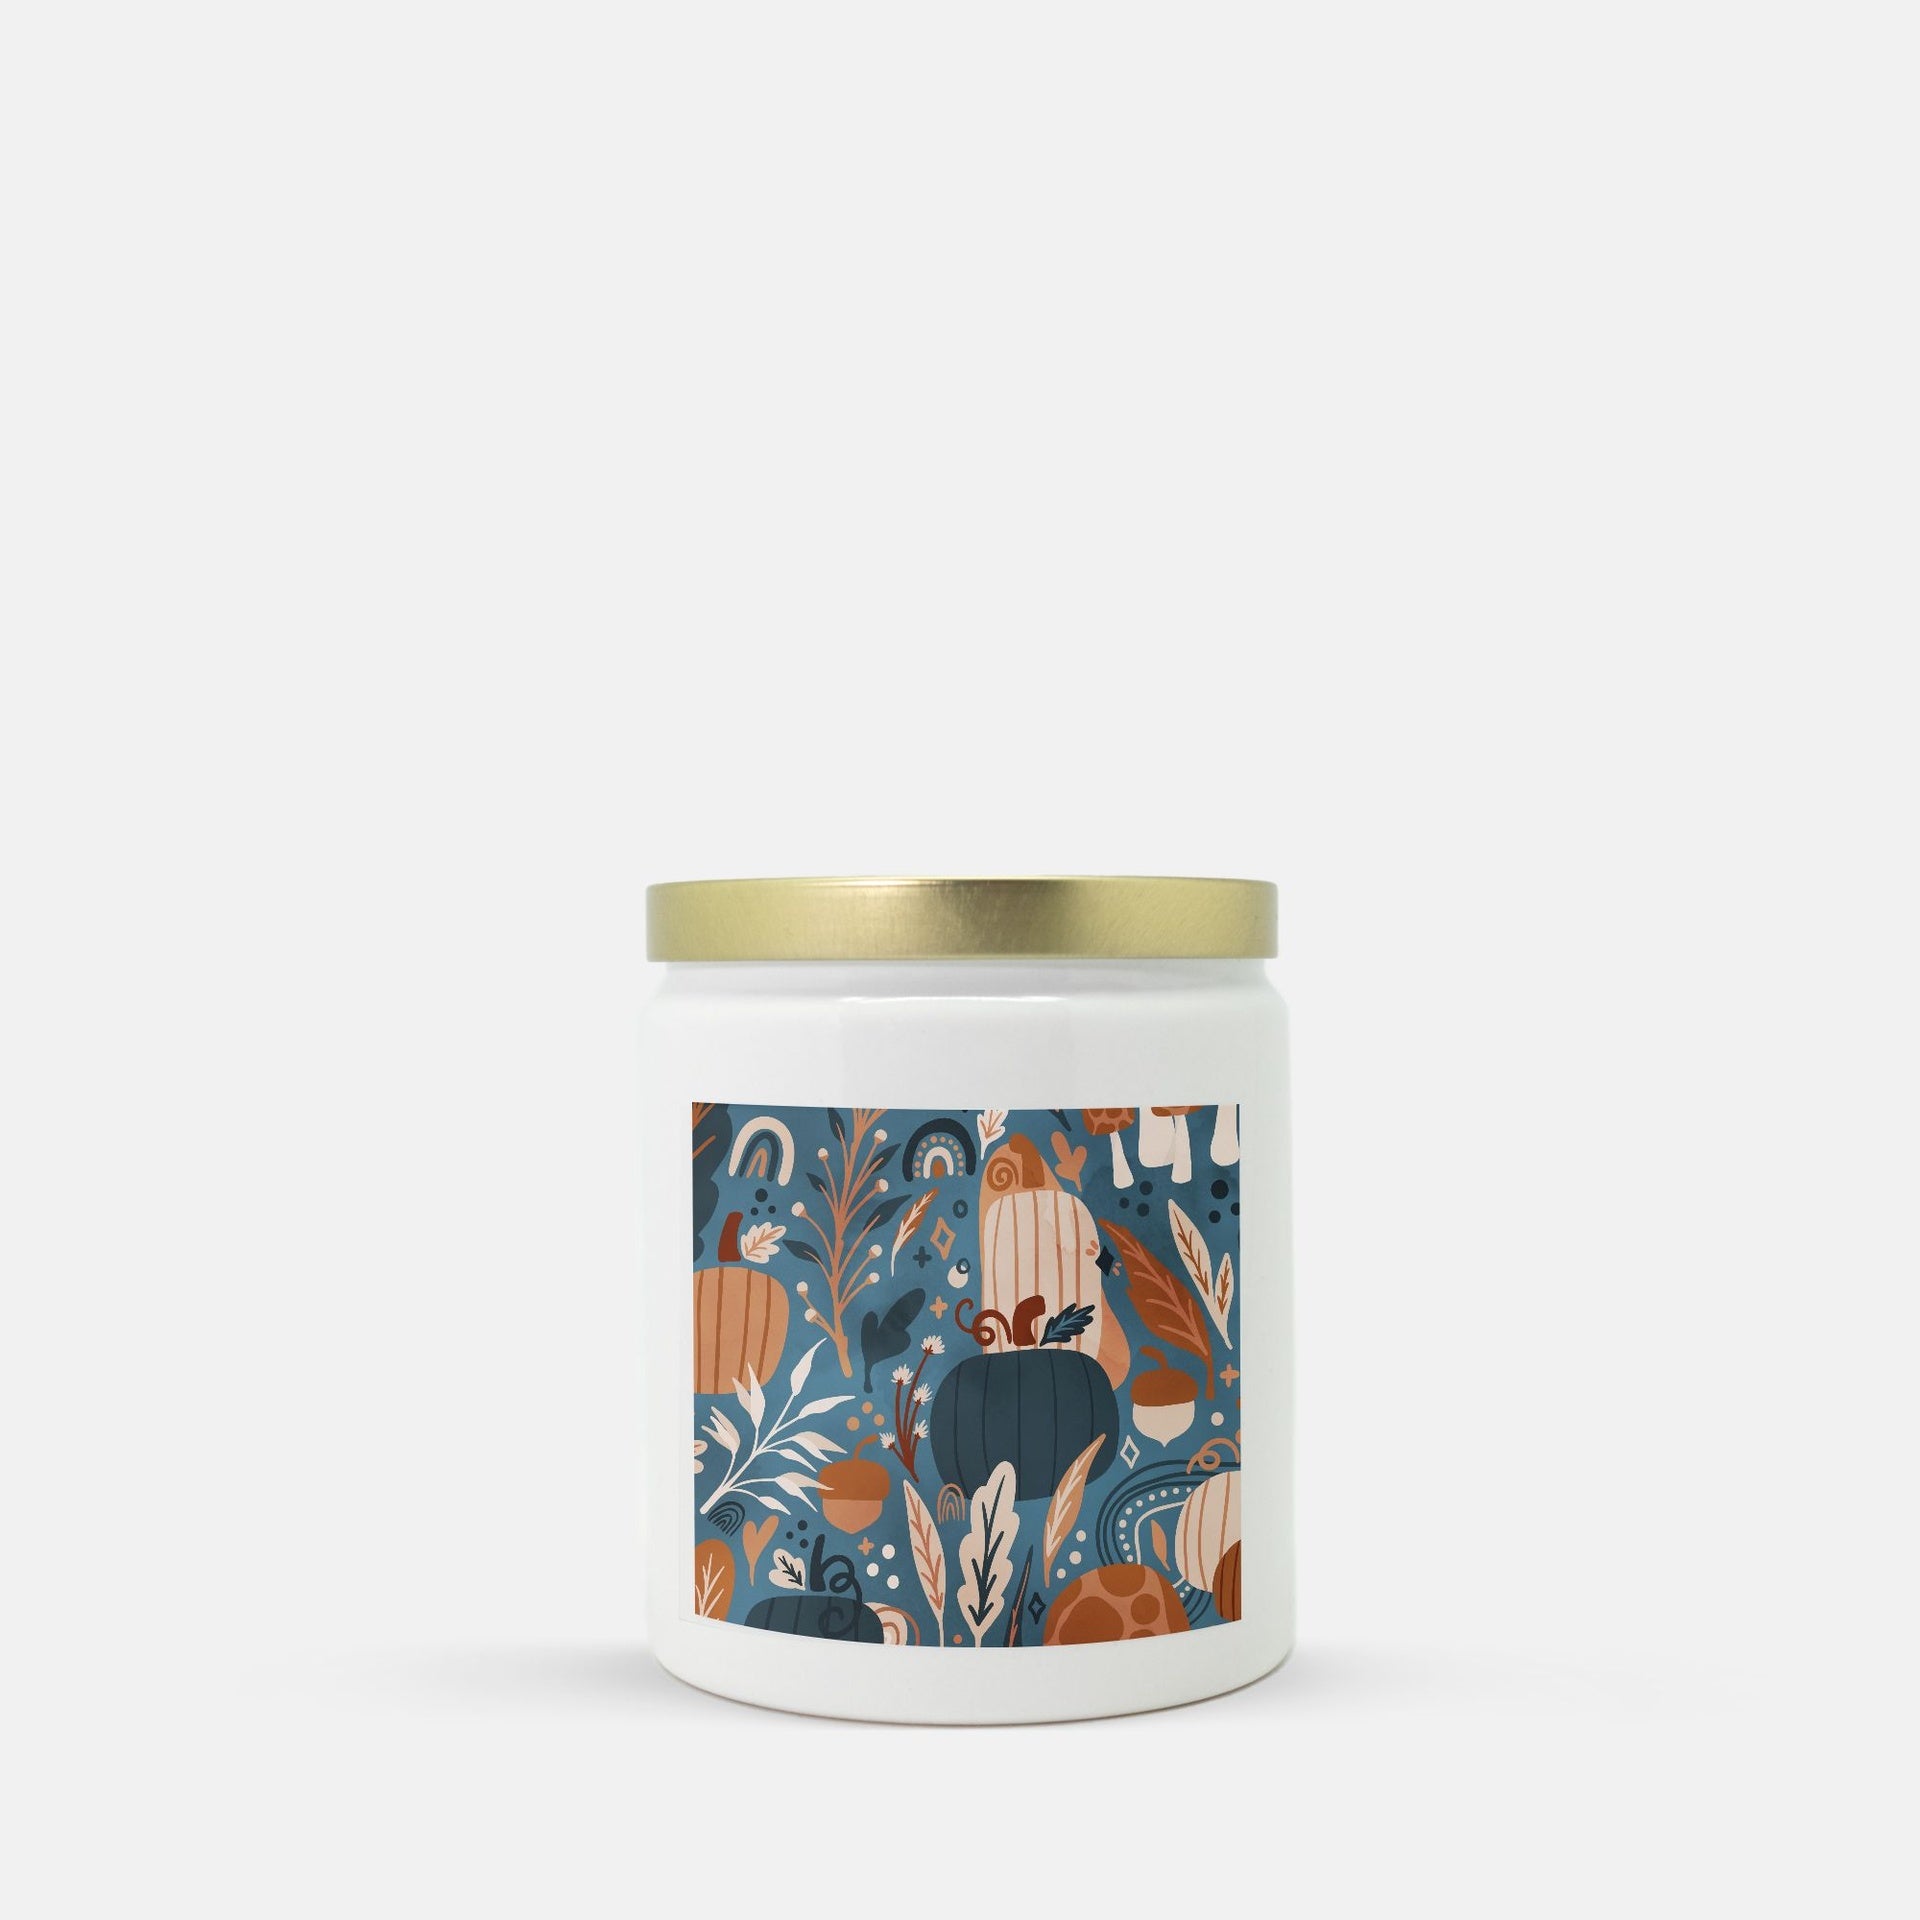 Lifestyle Details - Colorful Autumn Nature Ceramic Candle w Gold Lid - Macintosh